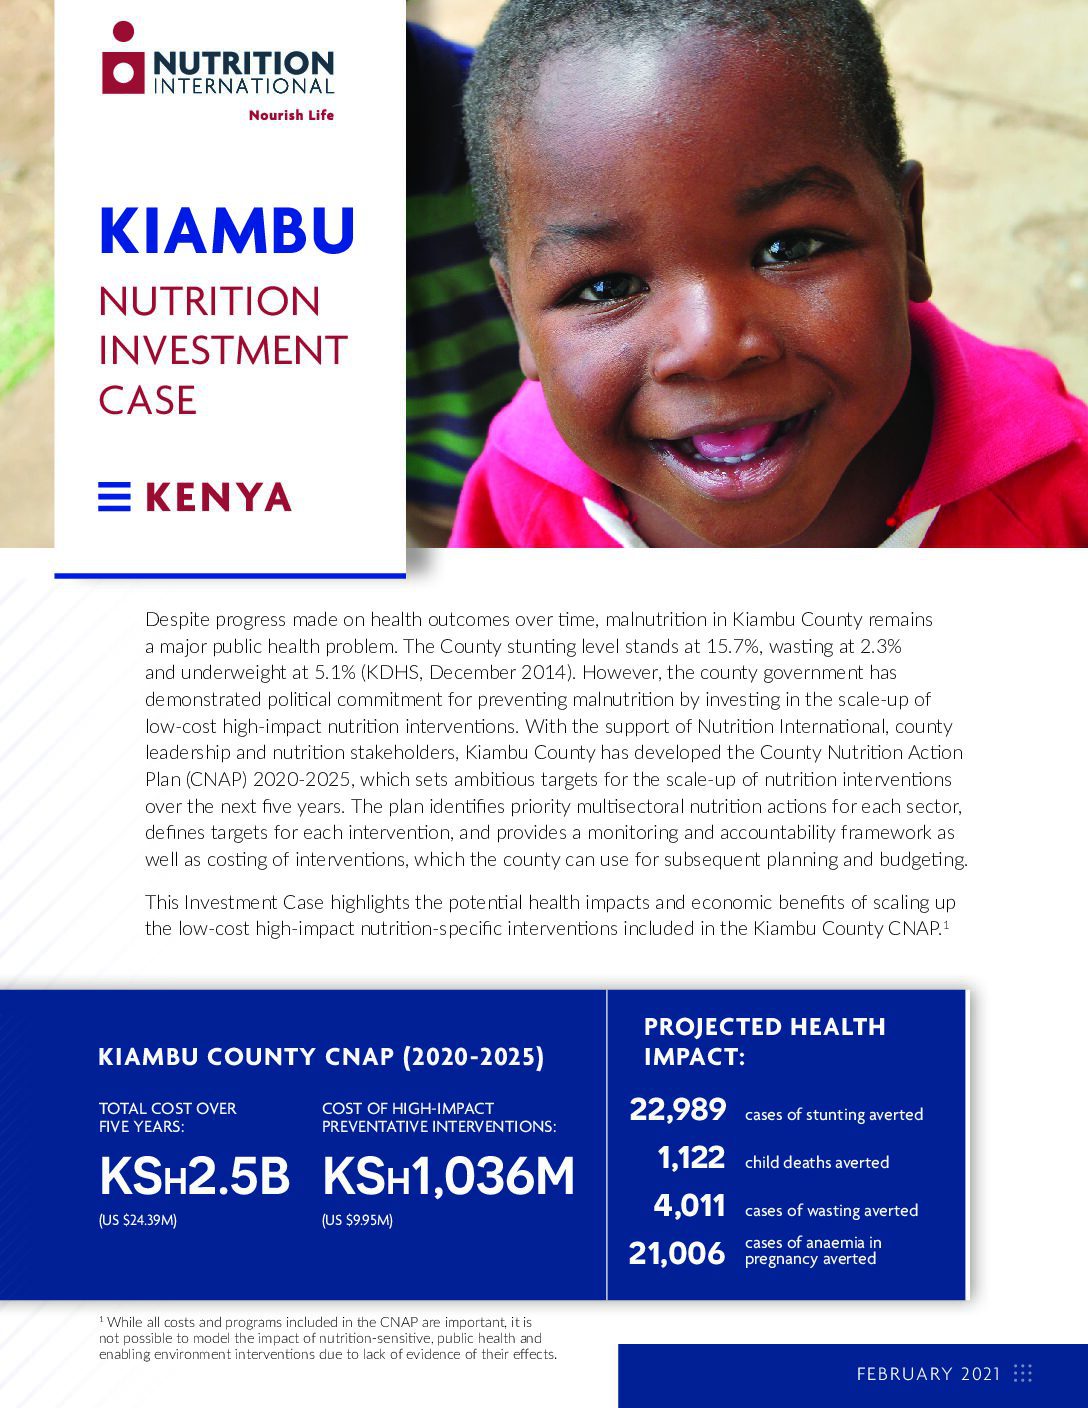 Kiambu County Nutrition Investment Case thumbnail